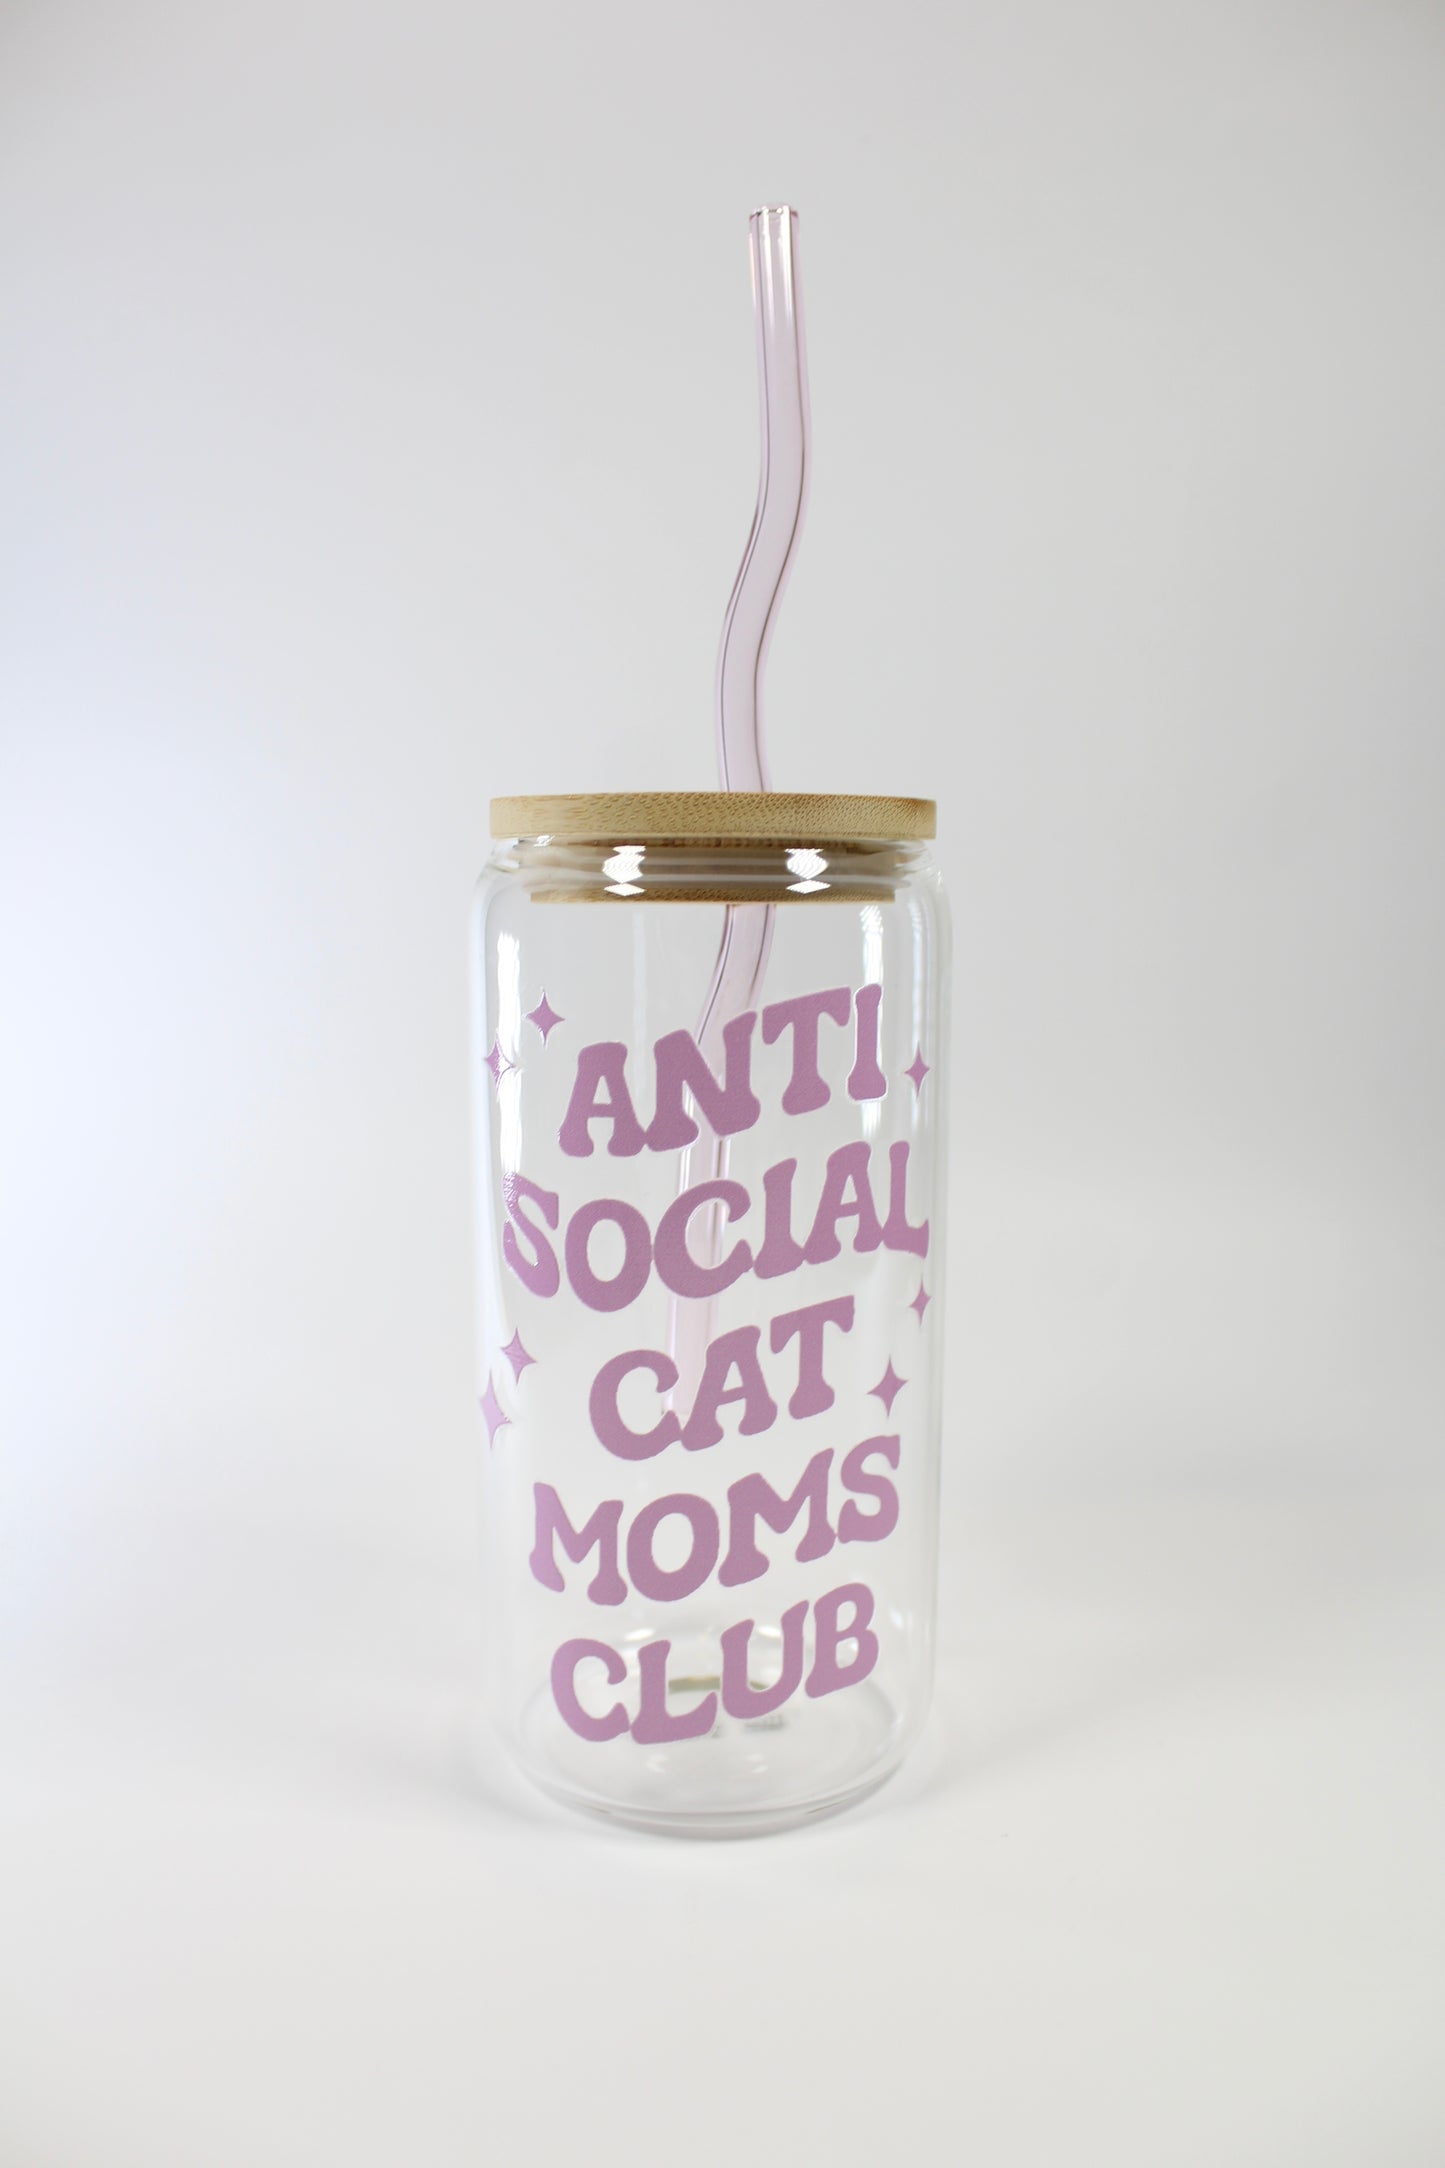 Antisocial cat moms club 🐱🤘🏻